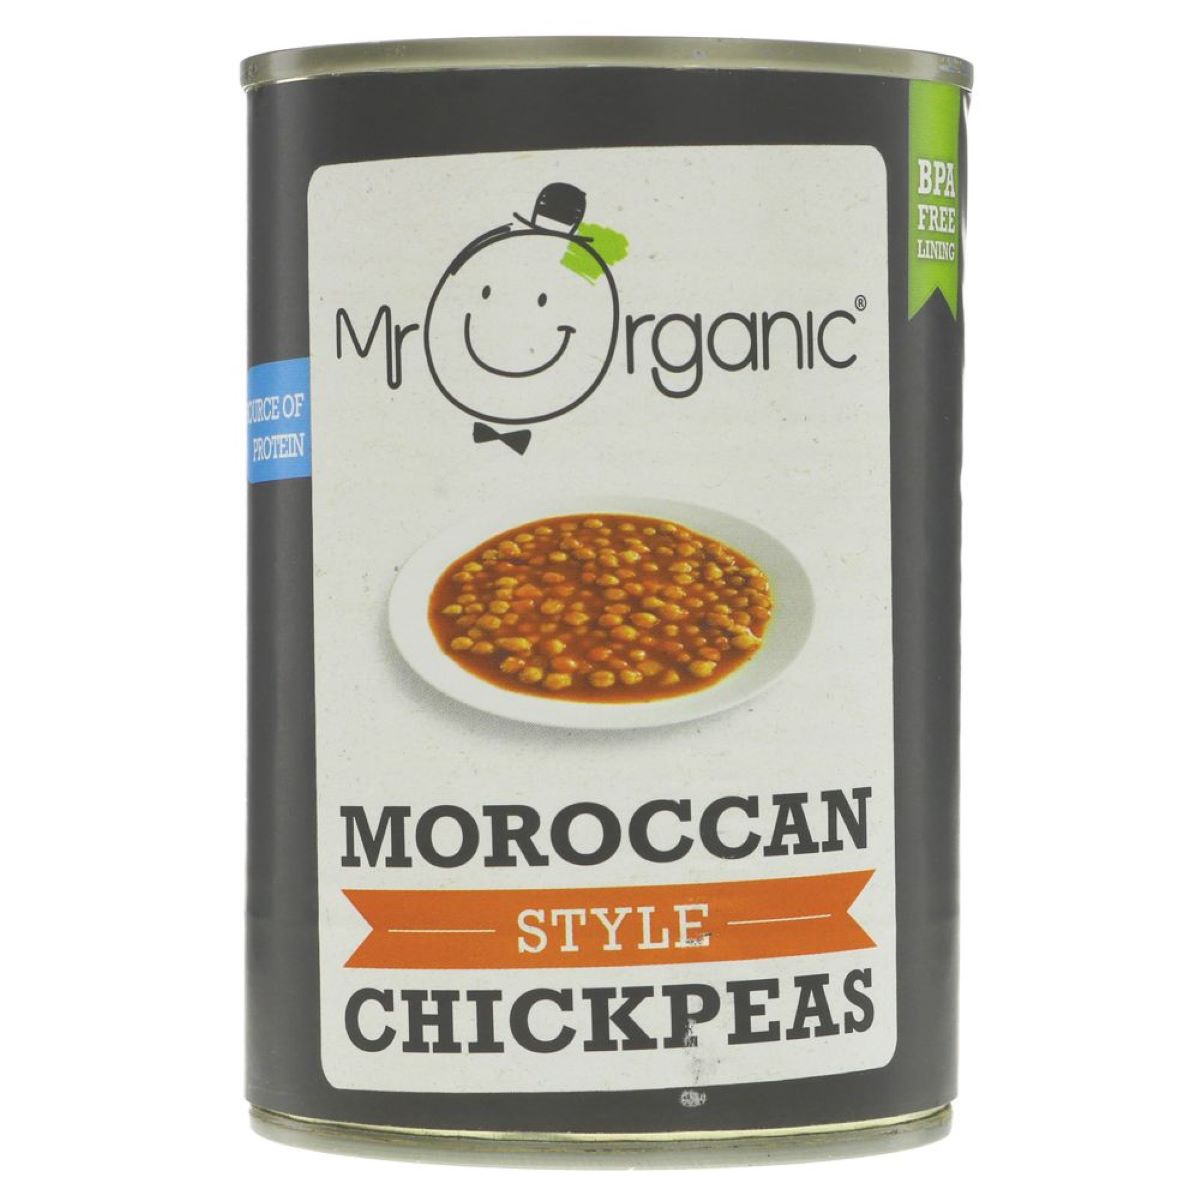 Mr Organic Moroccan Style Chickpeas 400g